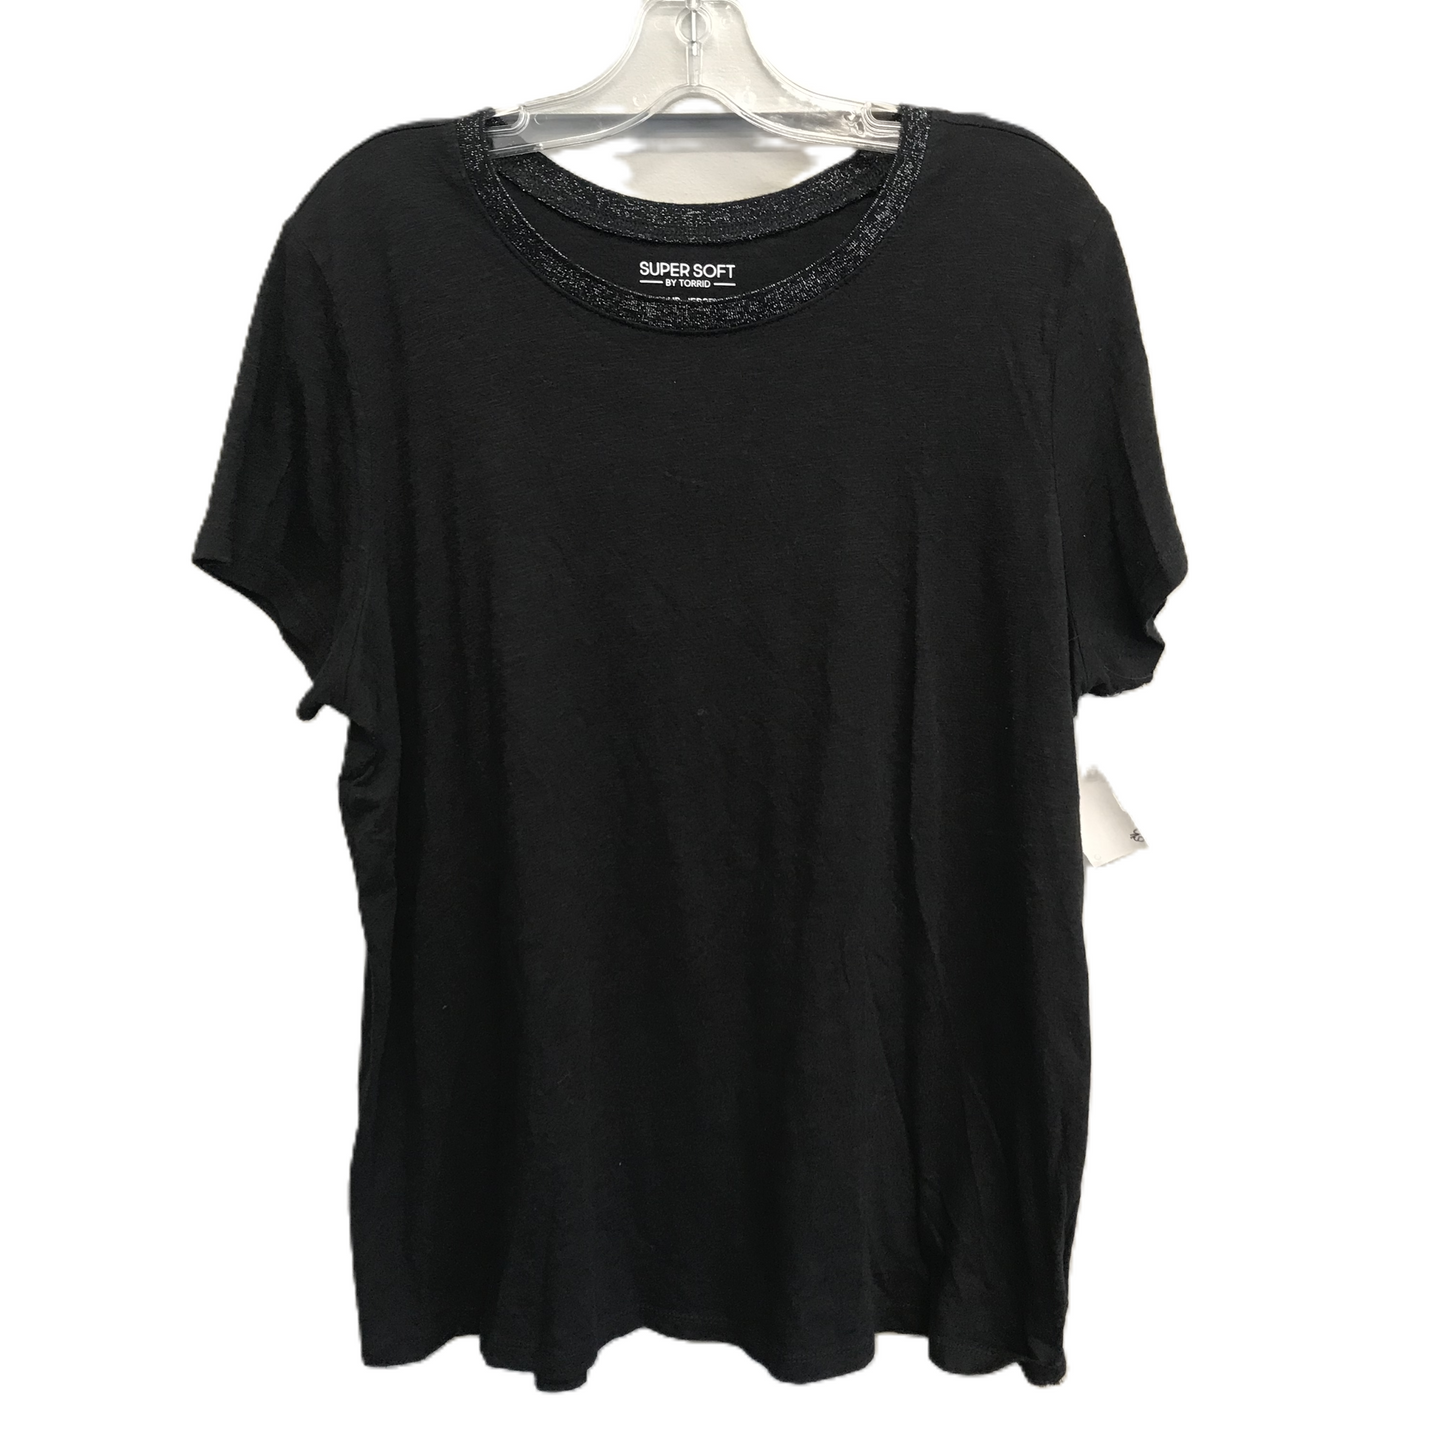 Black Top Short Sleeve Basic By Torrid, Size: 1x